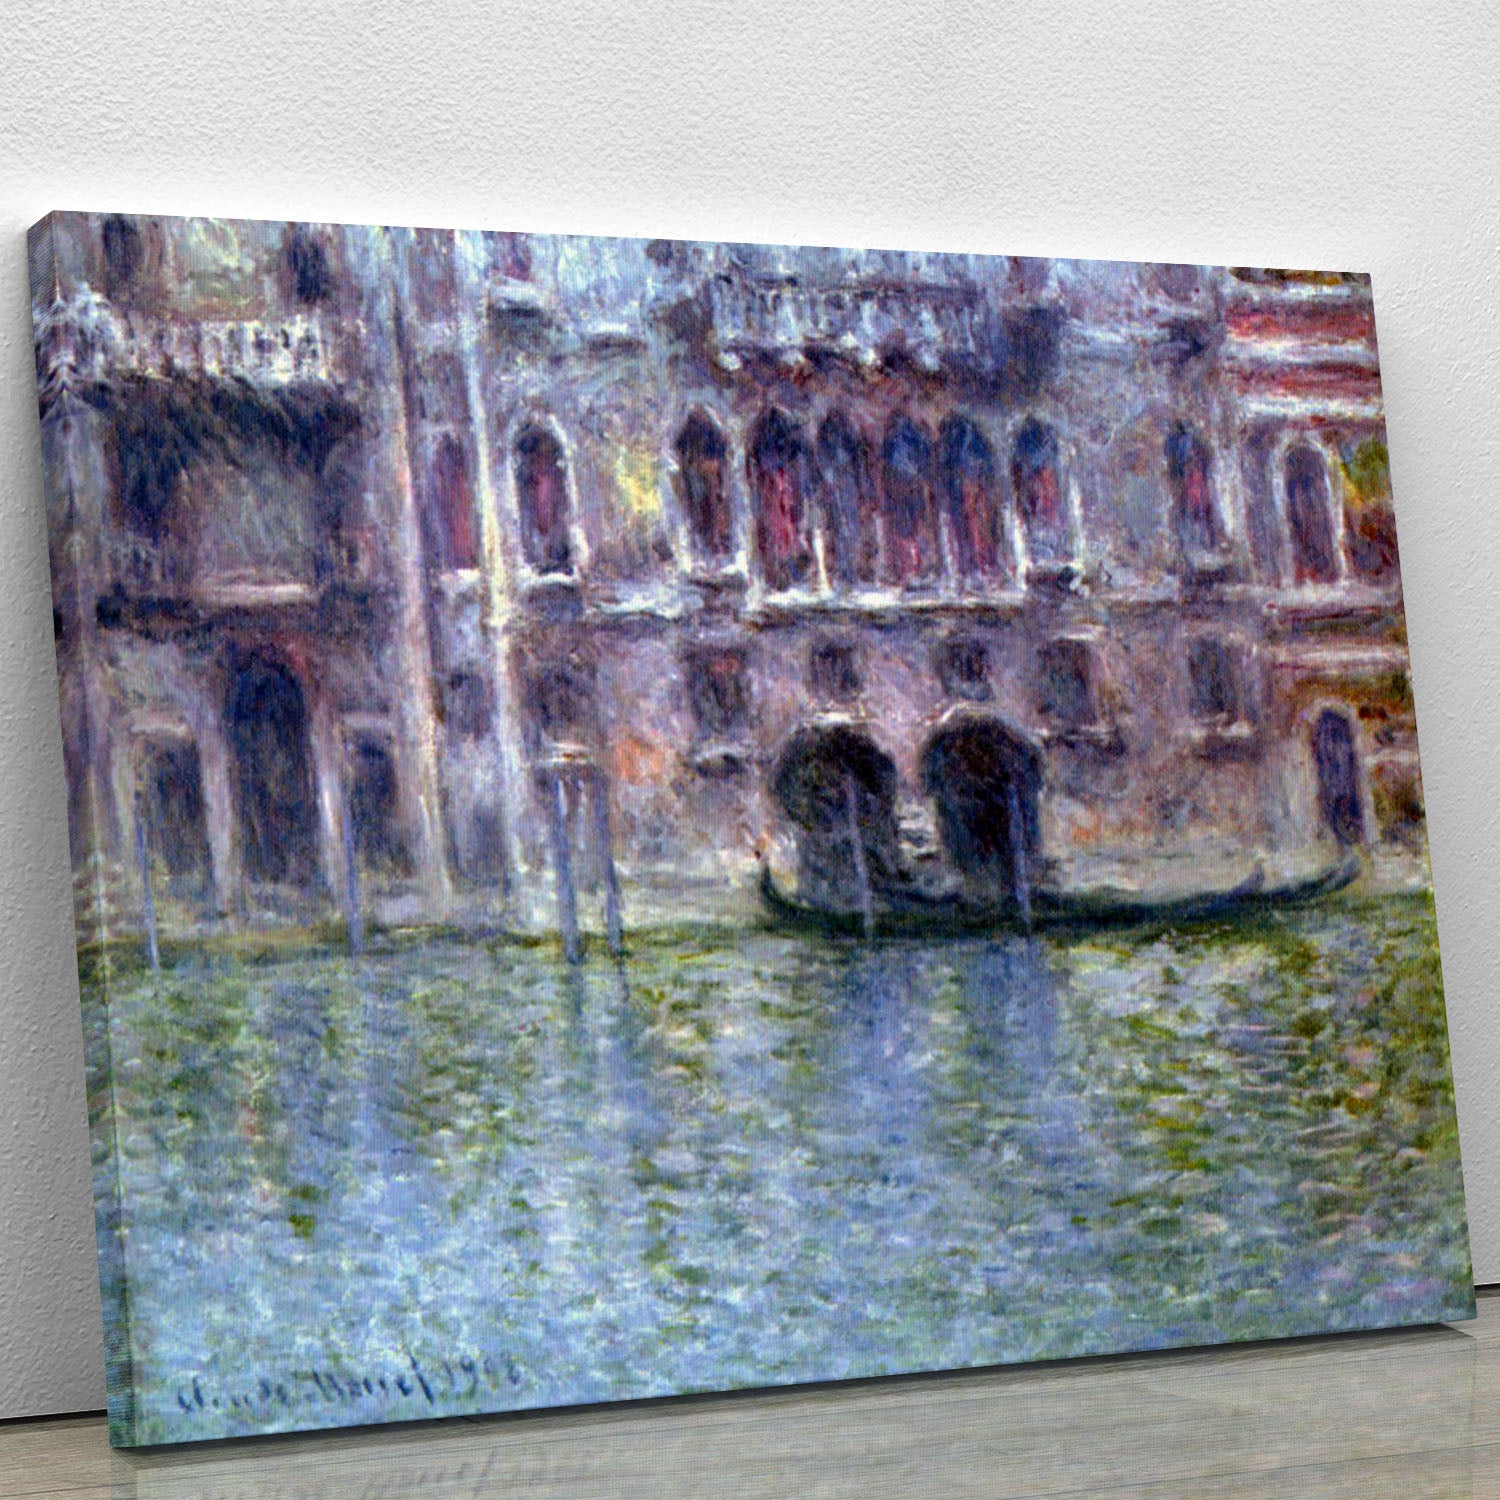 Palazzo da Mula Venice by Monet Canvas Print or Poster - Canvas Art Rocks - 1